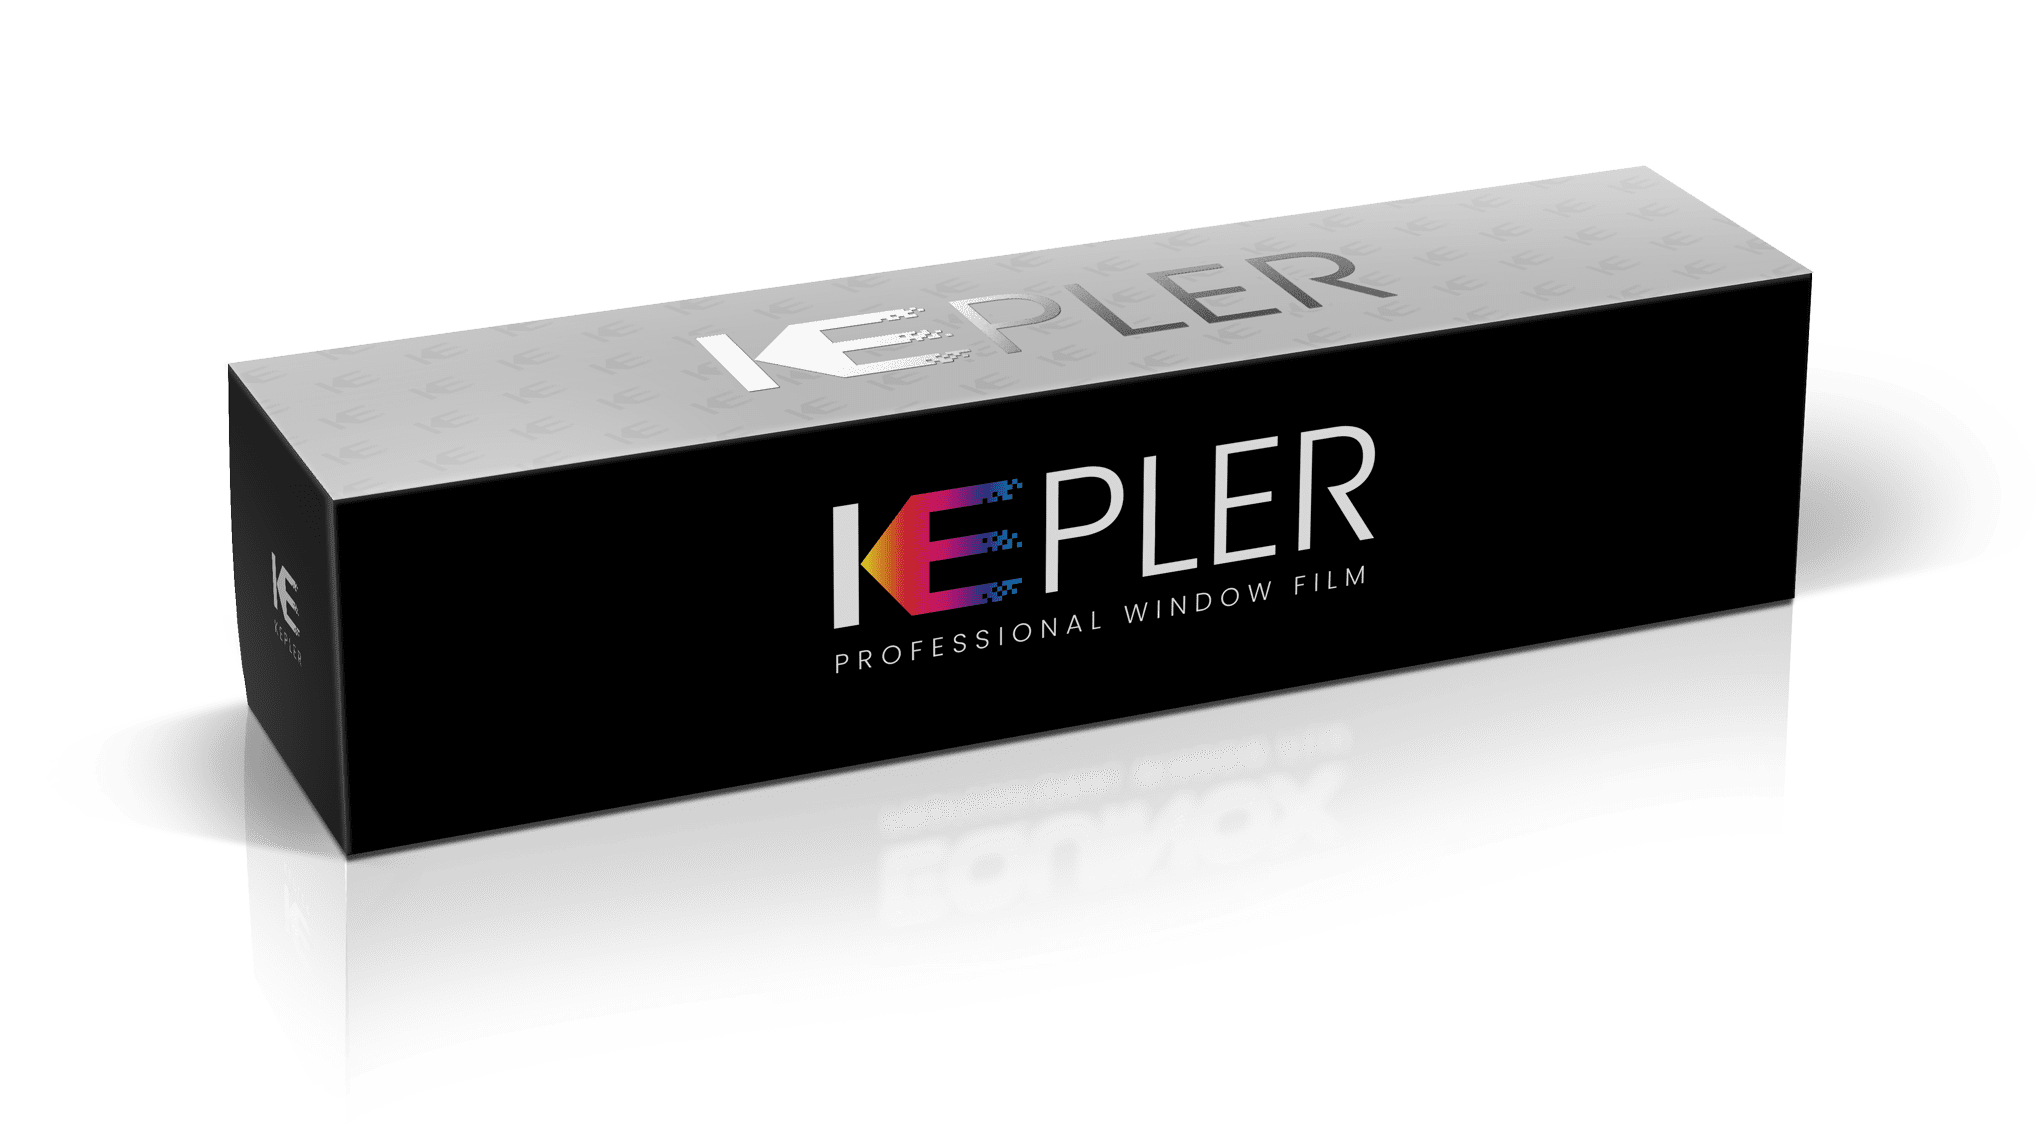 Kepler window film box for Tintbusiness website